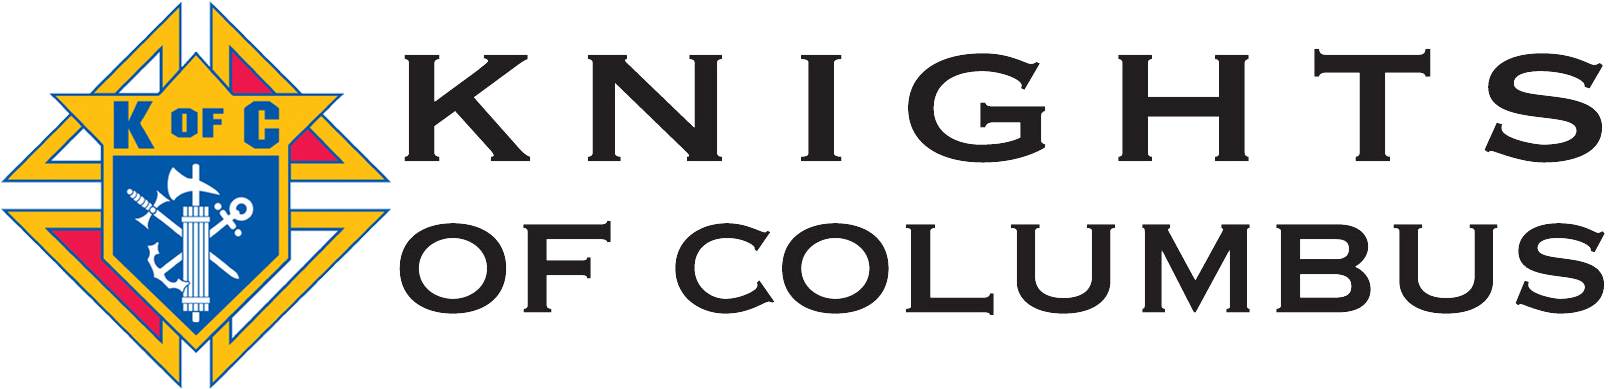 Logo - Knights Of Columbus Fish Fry (1641x389)